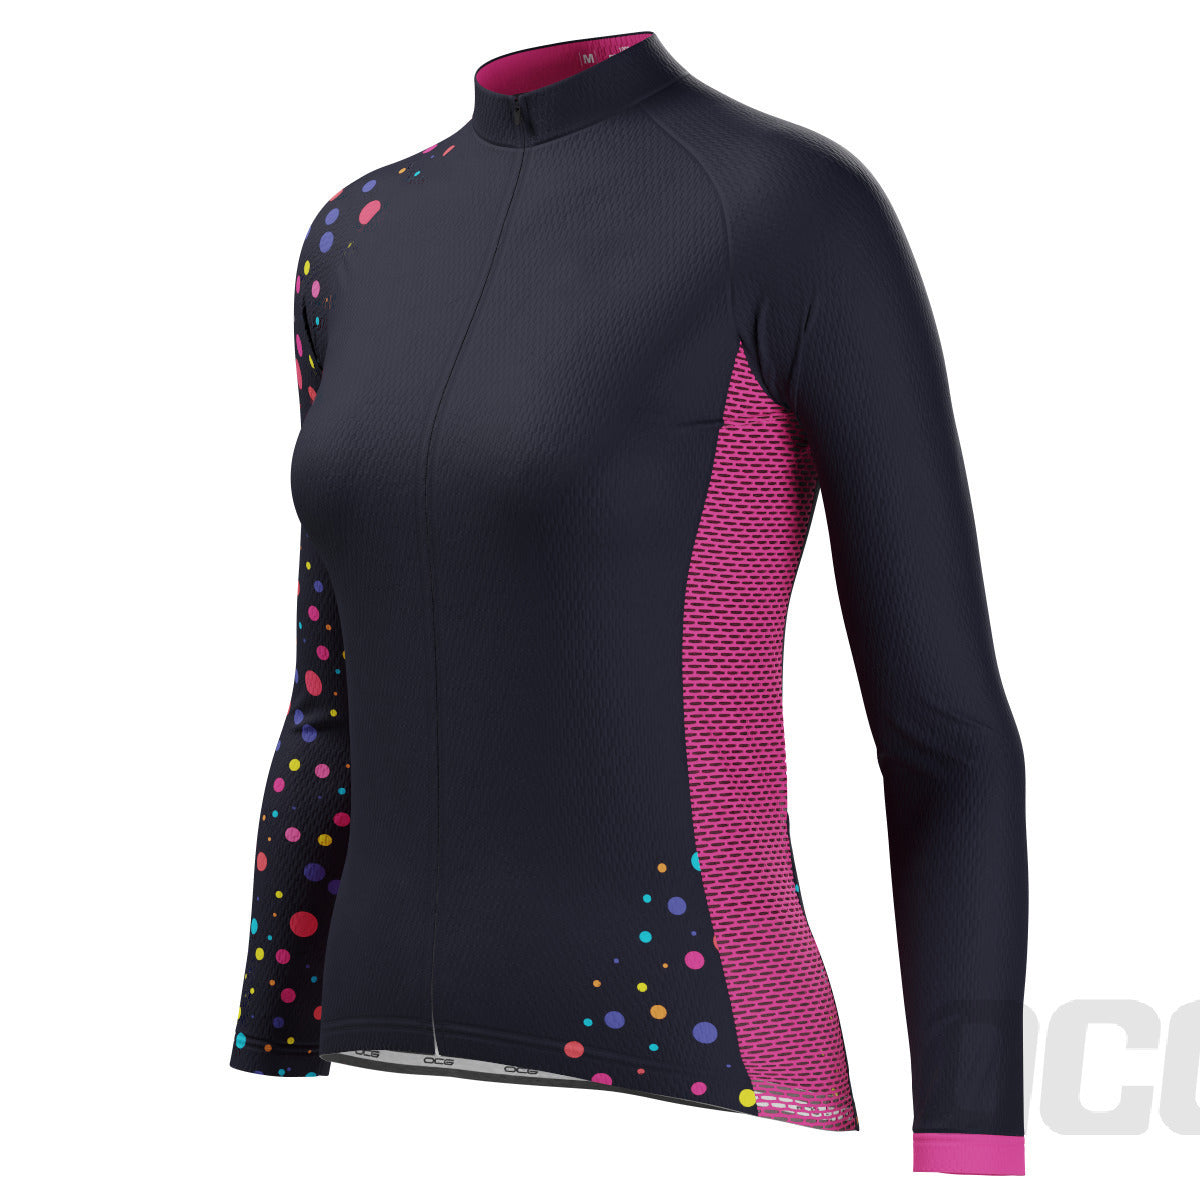 Women's Rainbow Polka Dots On Black Long Sleeve Cycling Jersey